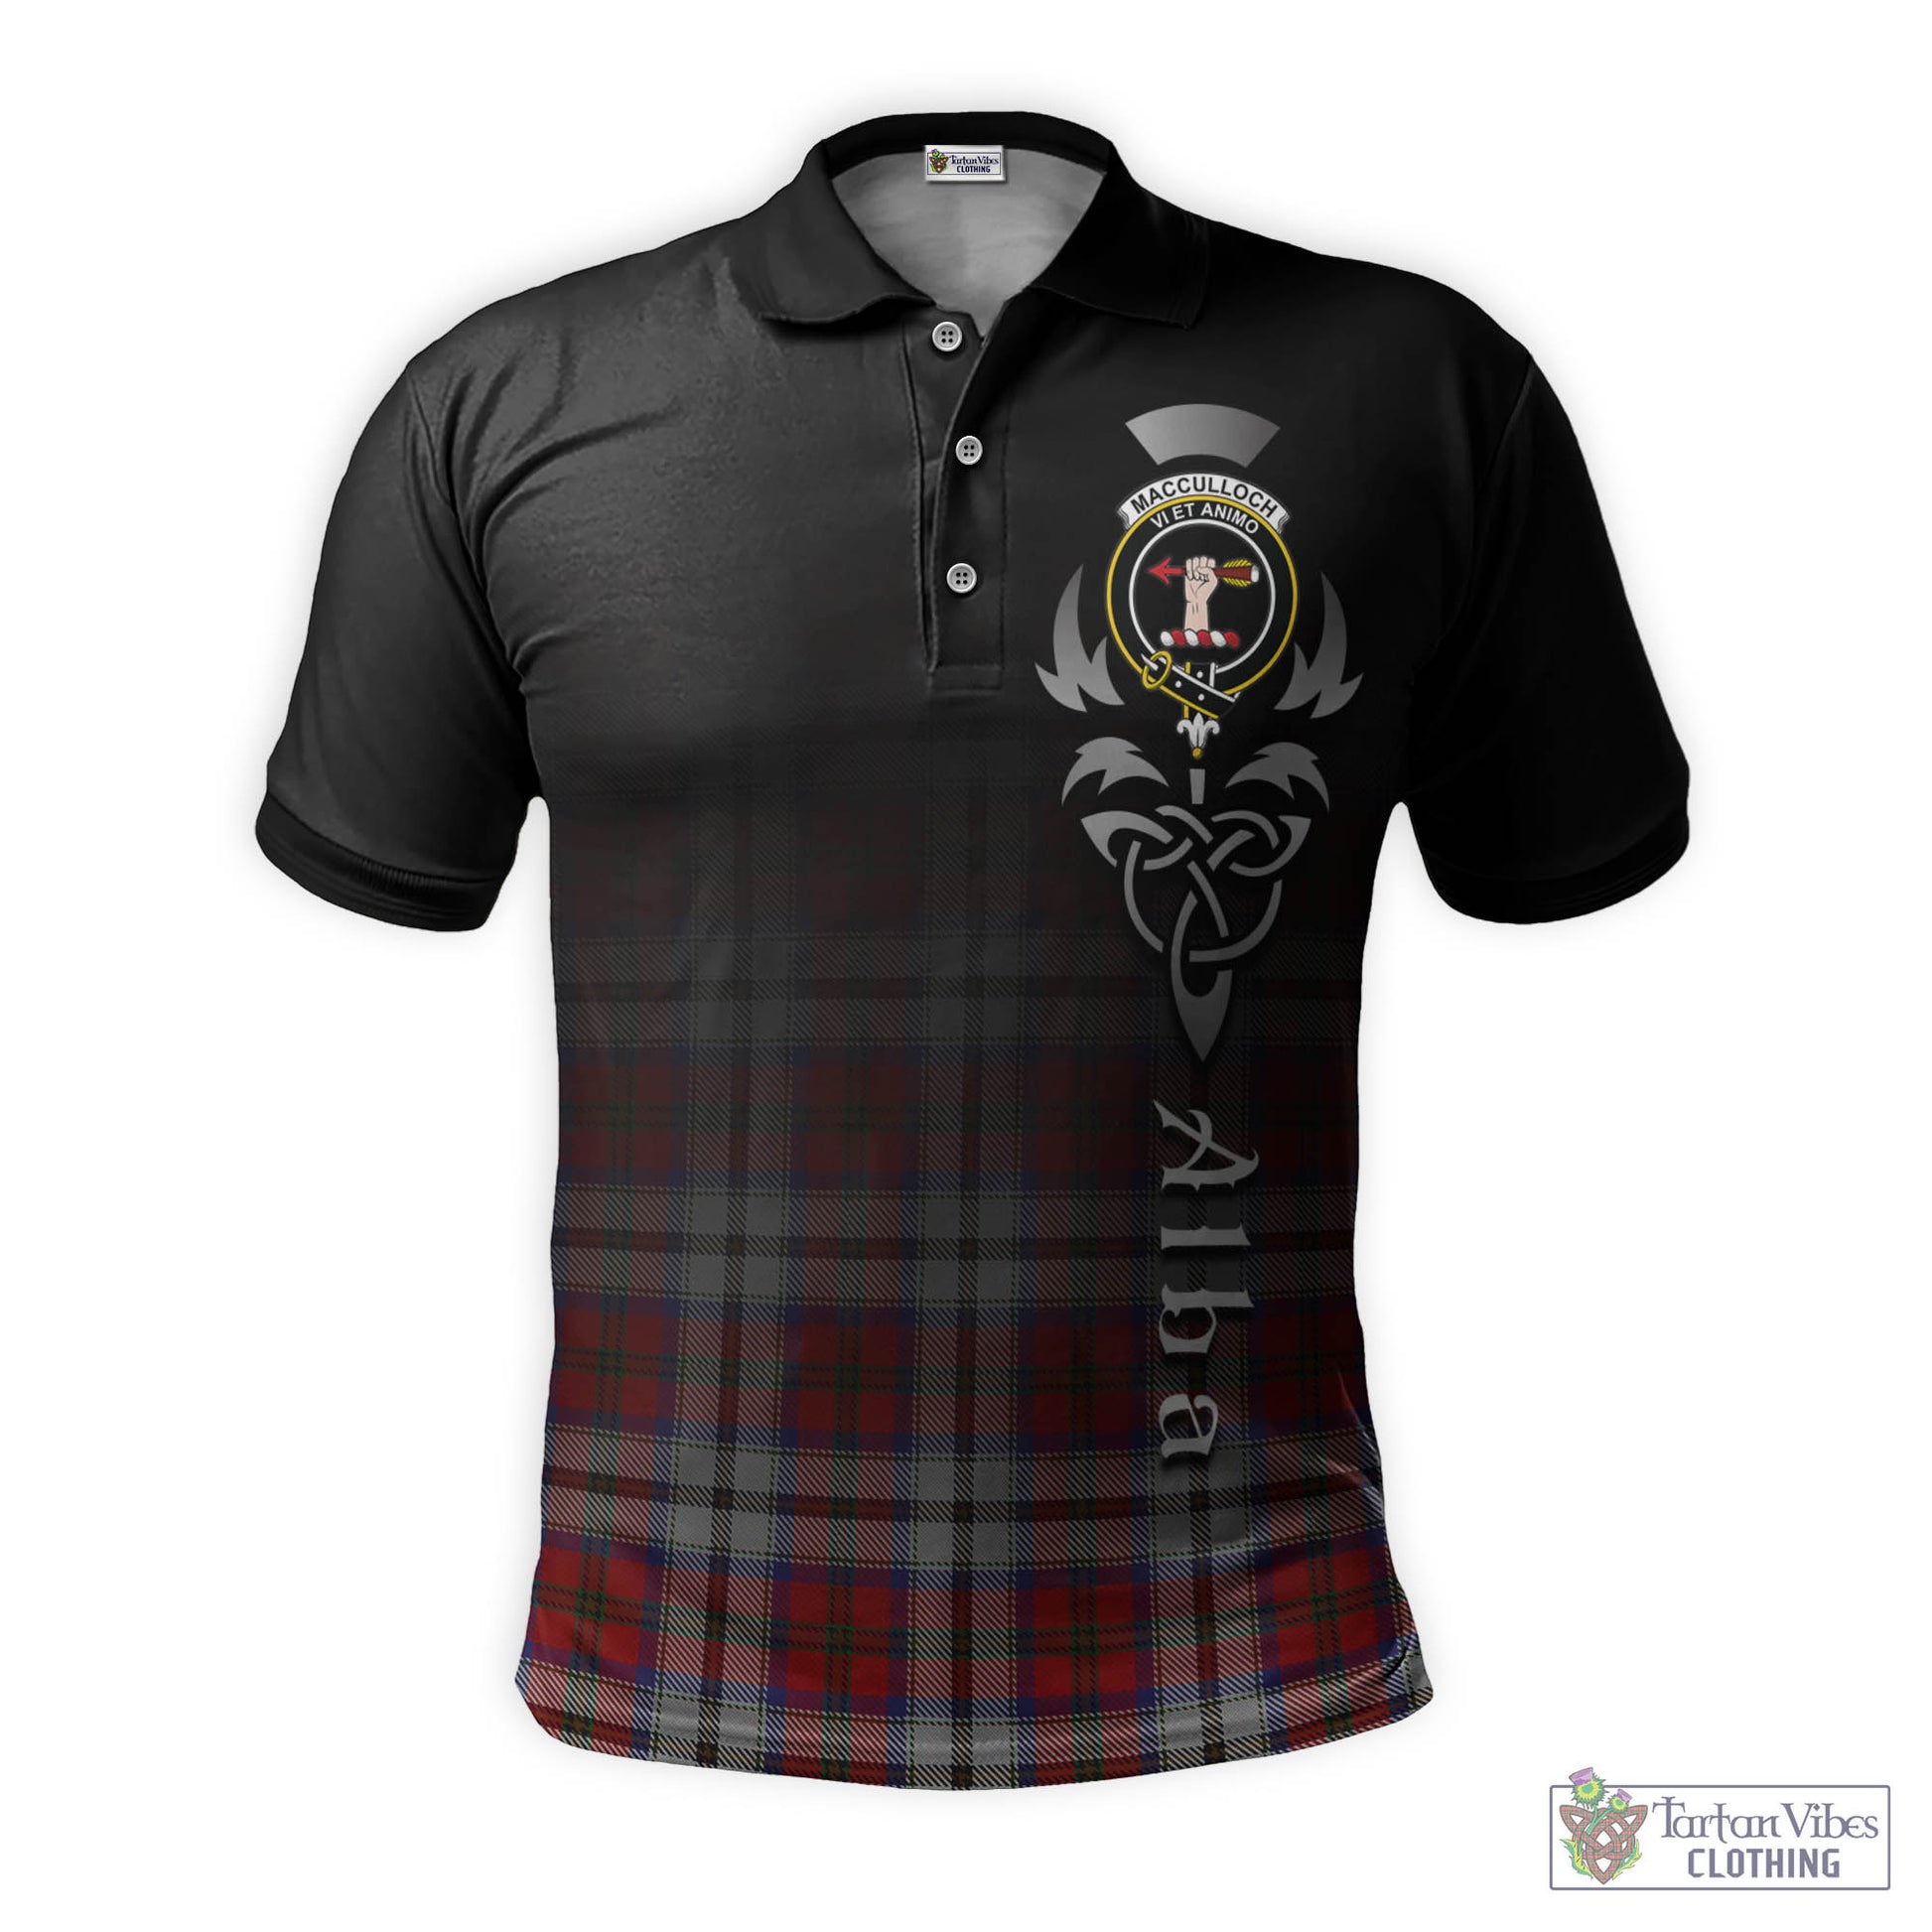 Tartan Vibes Clothing MacCulloch Dress Tartan Polo Shirt Featuring Alba Gu Brath Family Crest Celtic Inspired